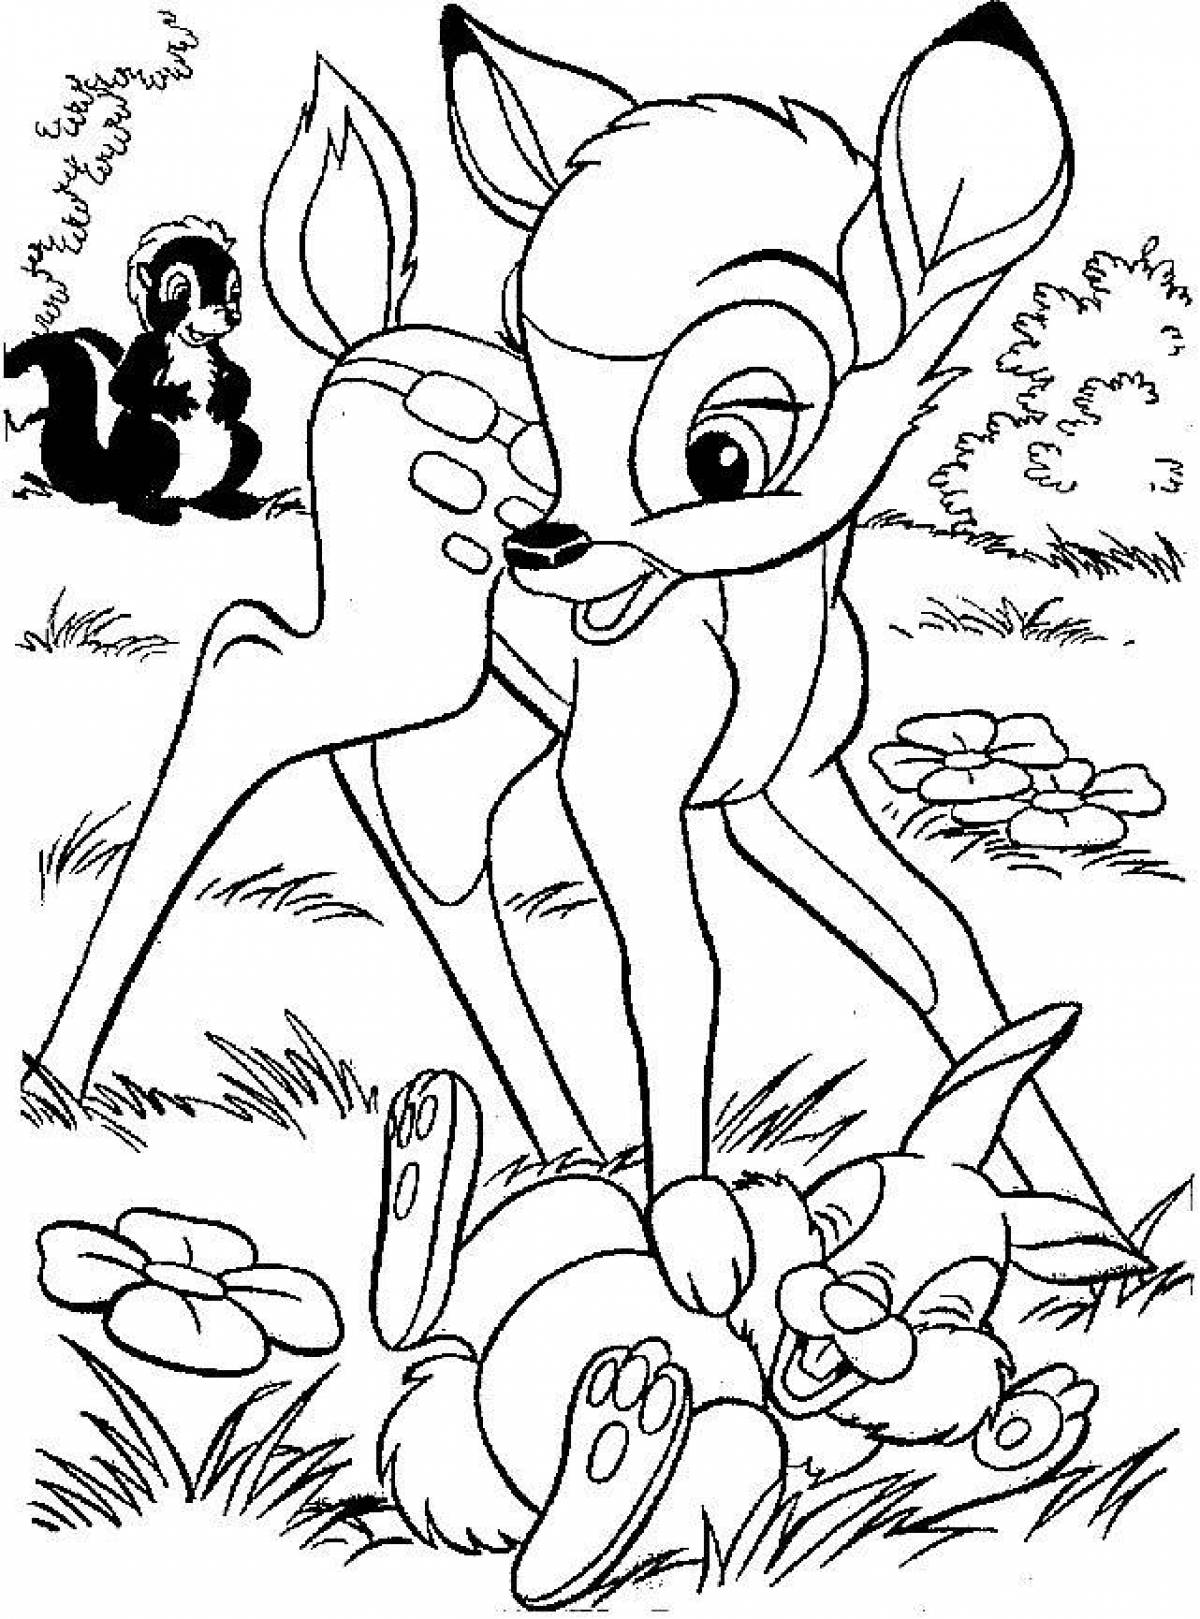 Photo From the cartoons, Bambi #2